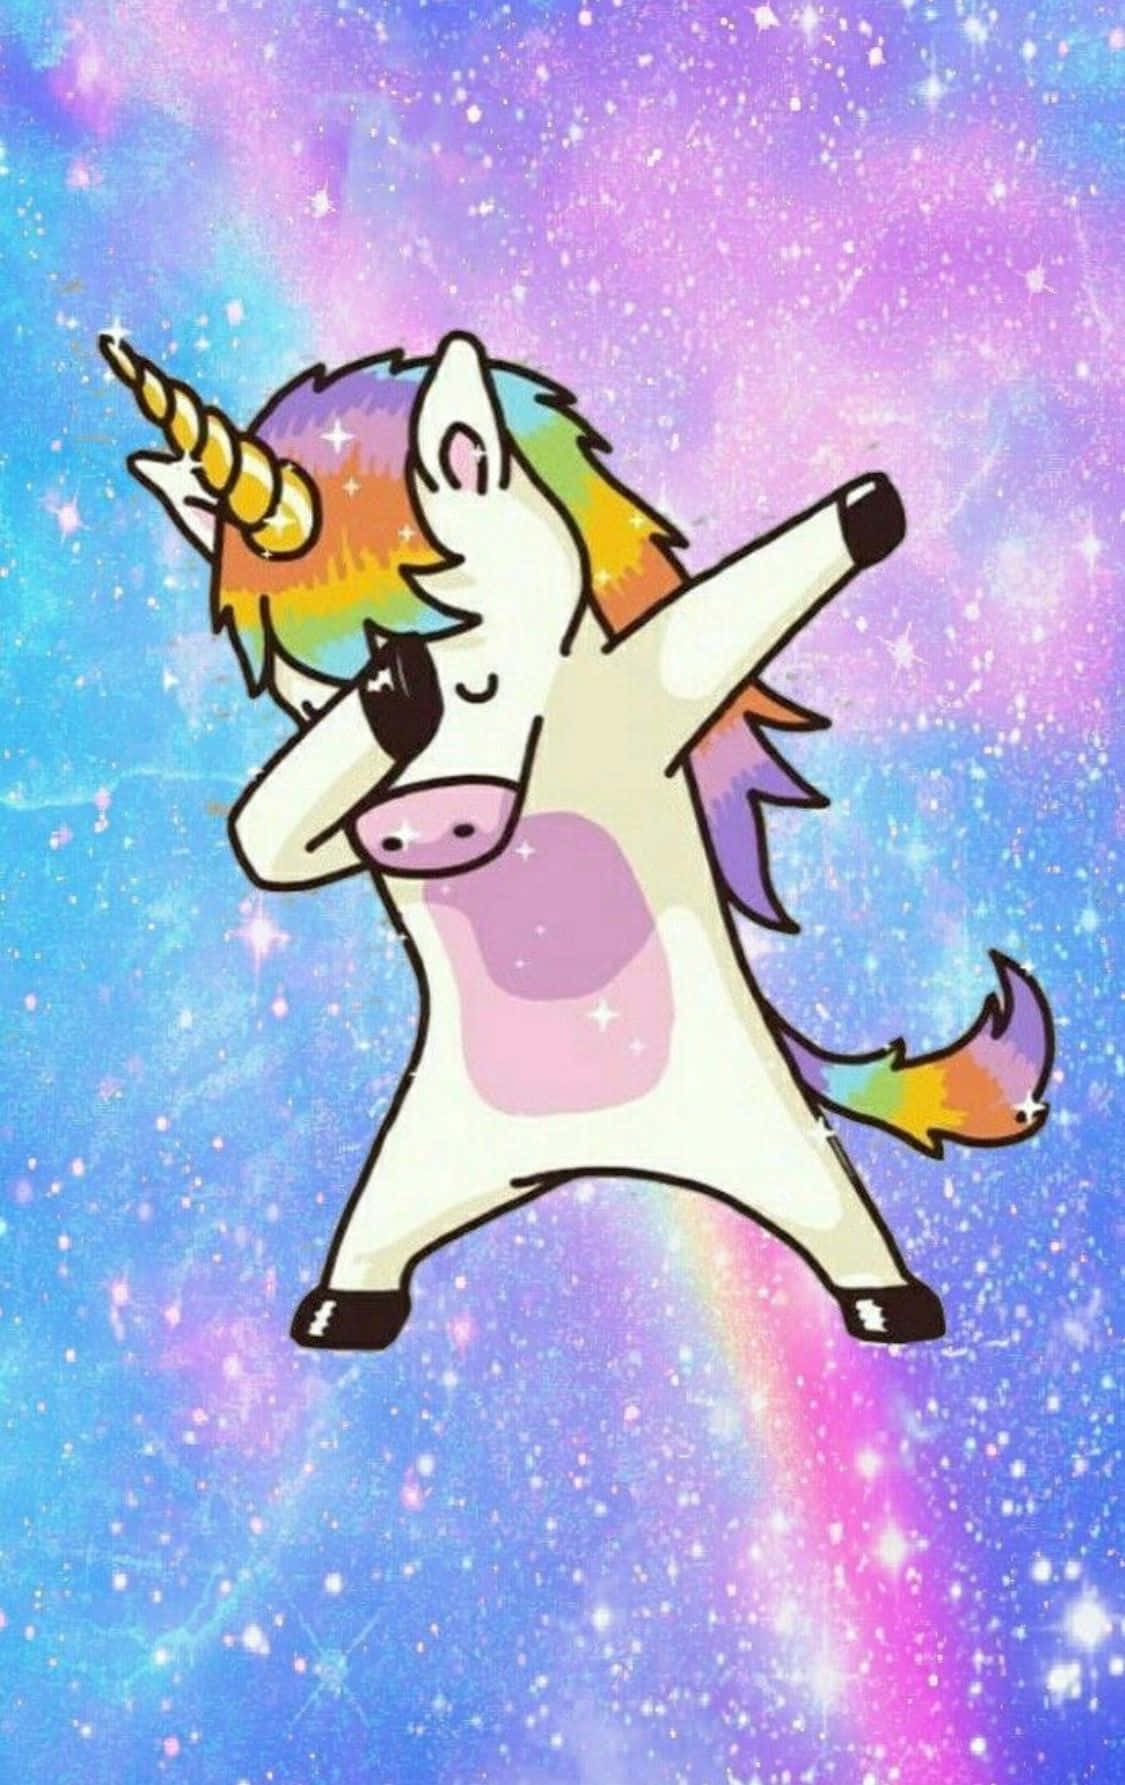 A Cartoon Unicorn Is Dancing In Space